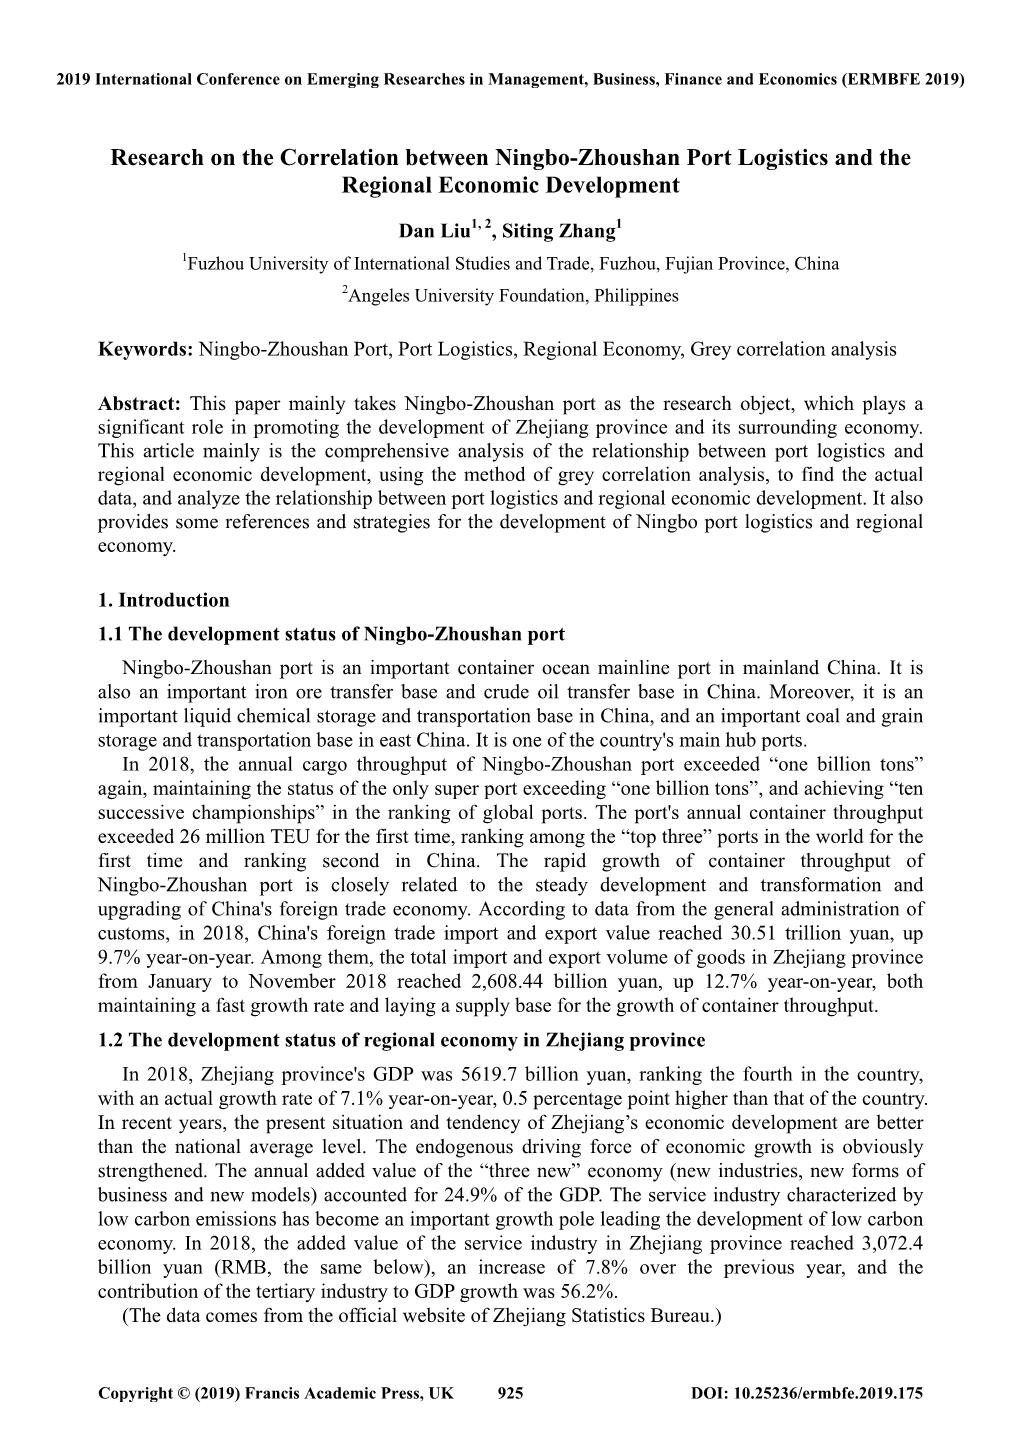 Research on the Correlation Between Ningbo-Zhoushan Port Logistics and the Regional Economic Development